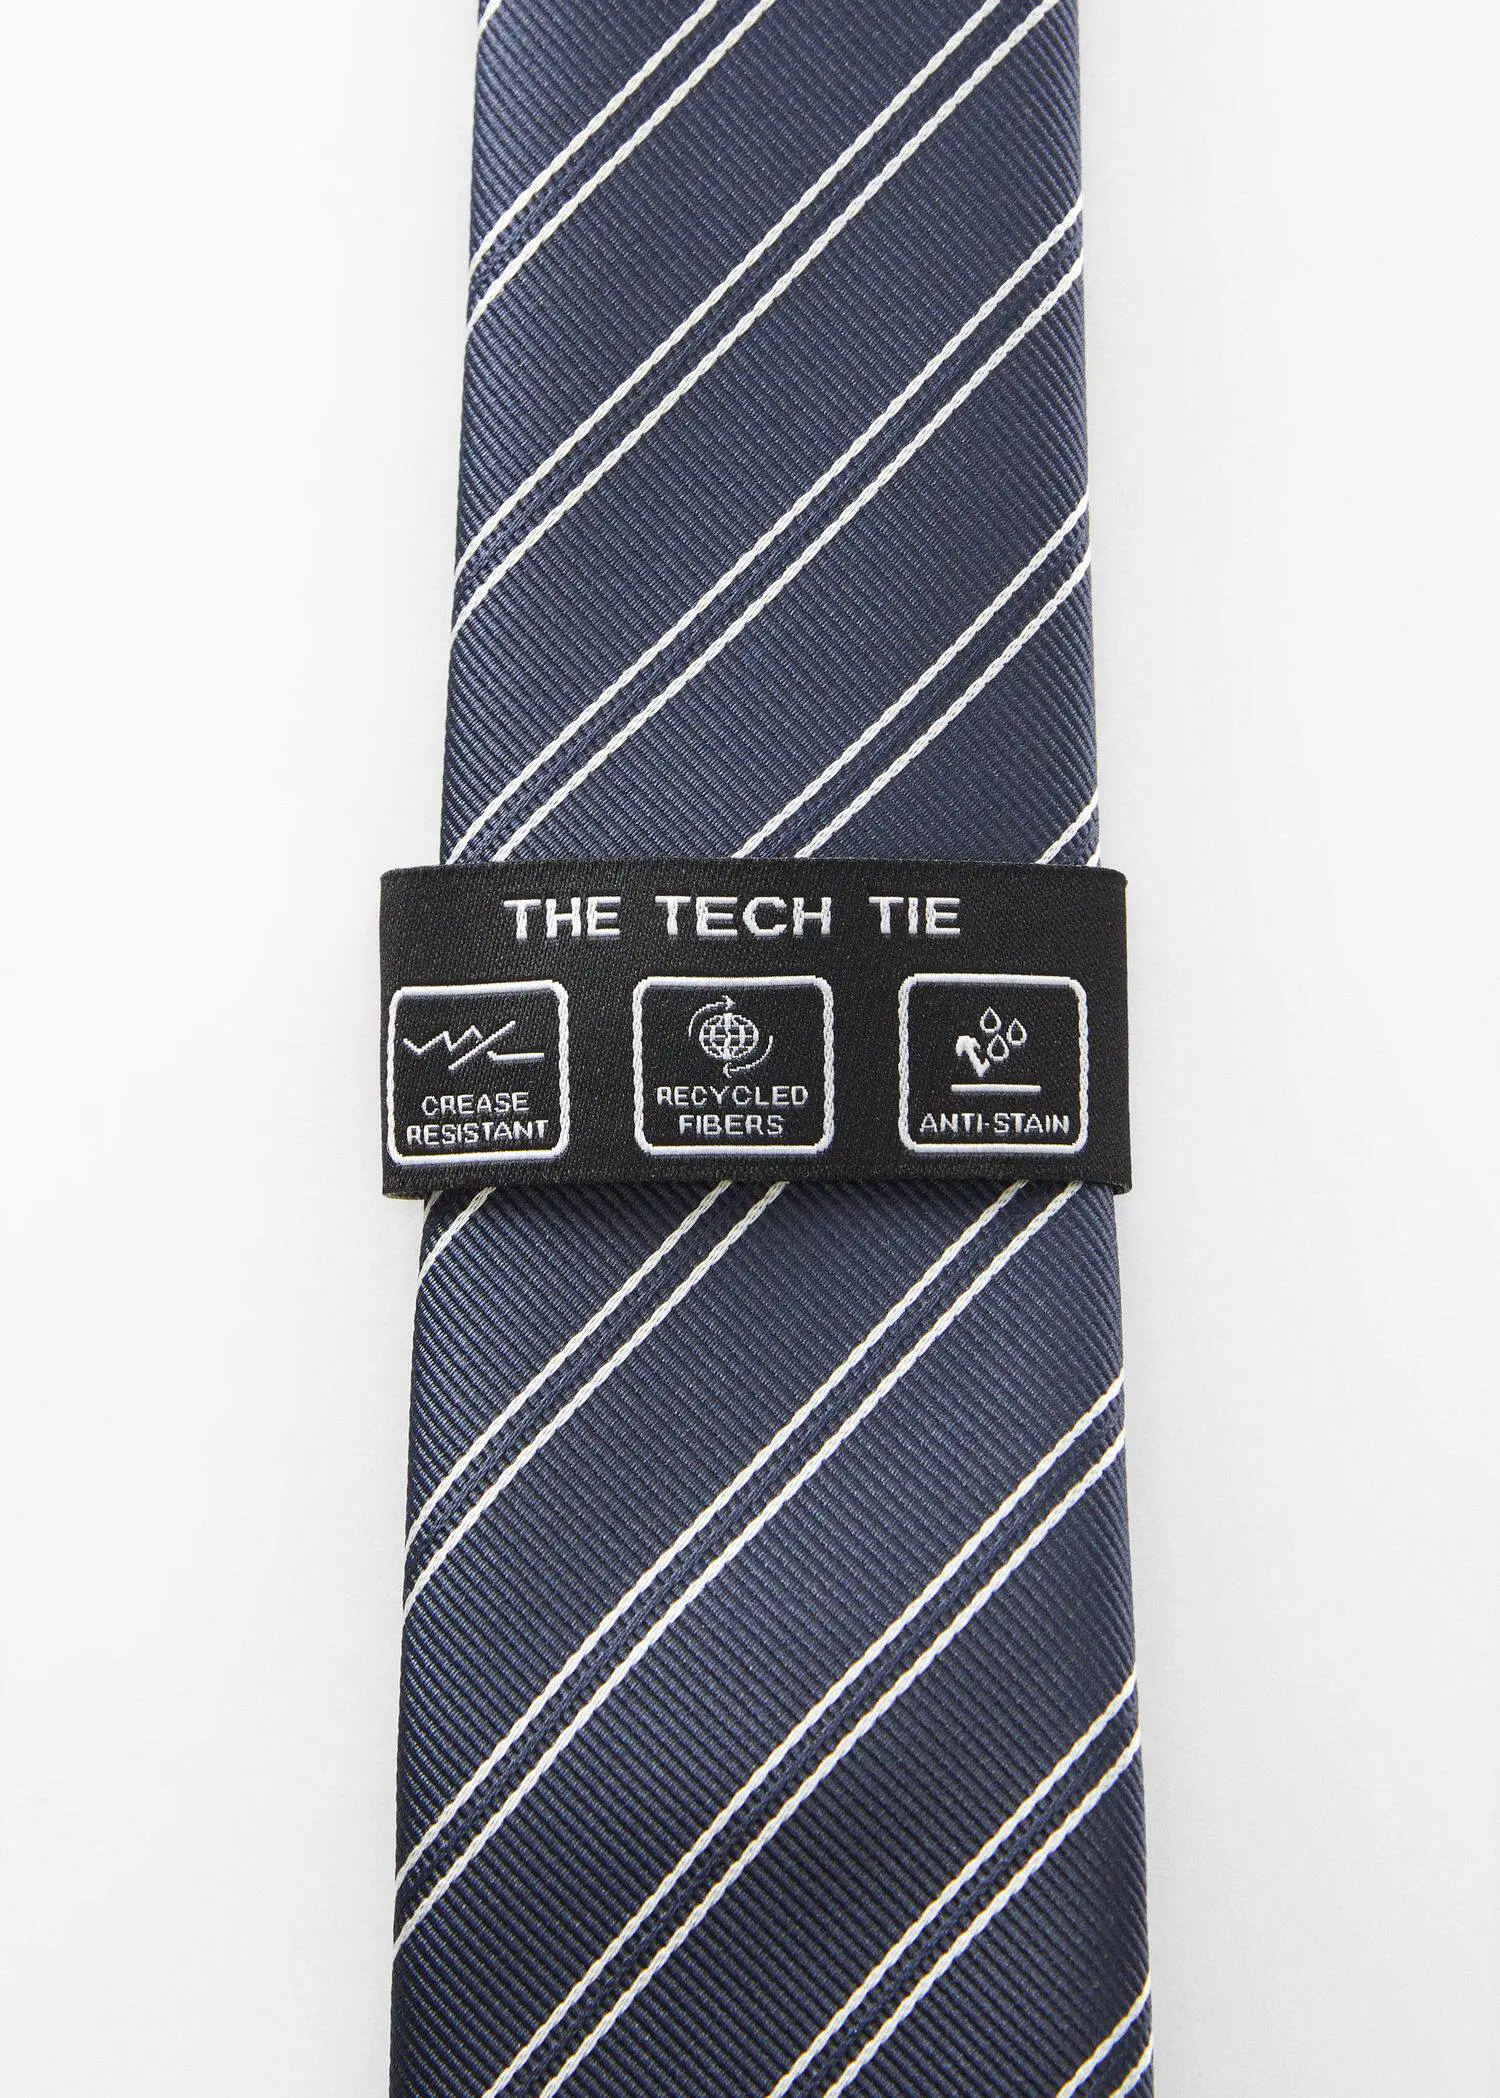 Mango Stain-resistant striped tie. 3